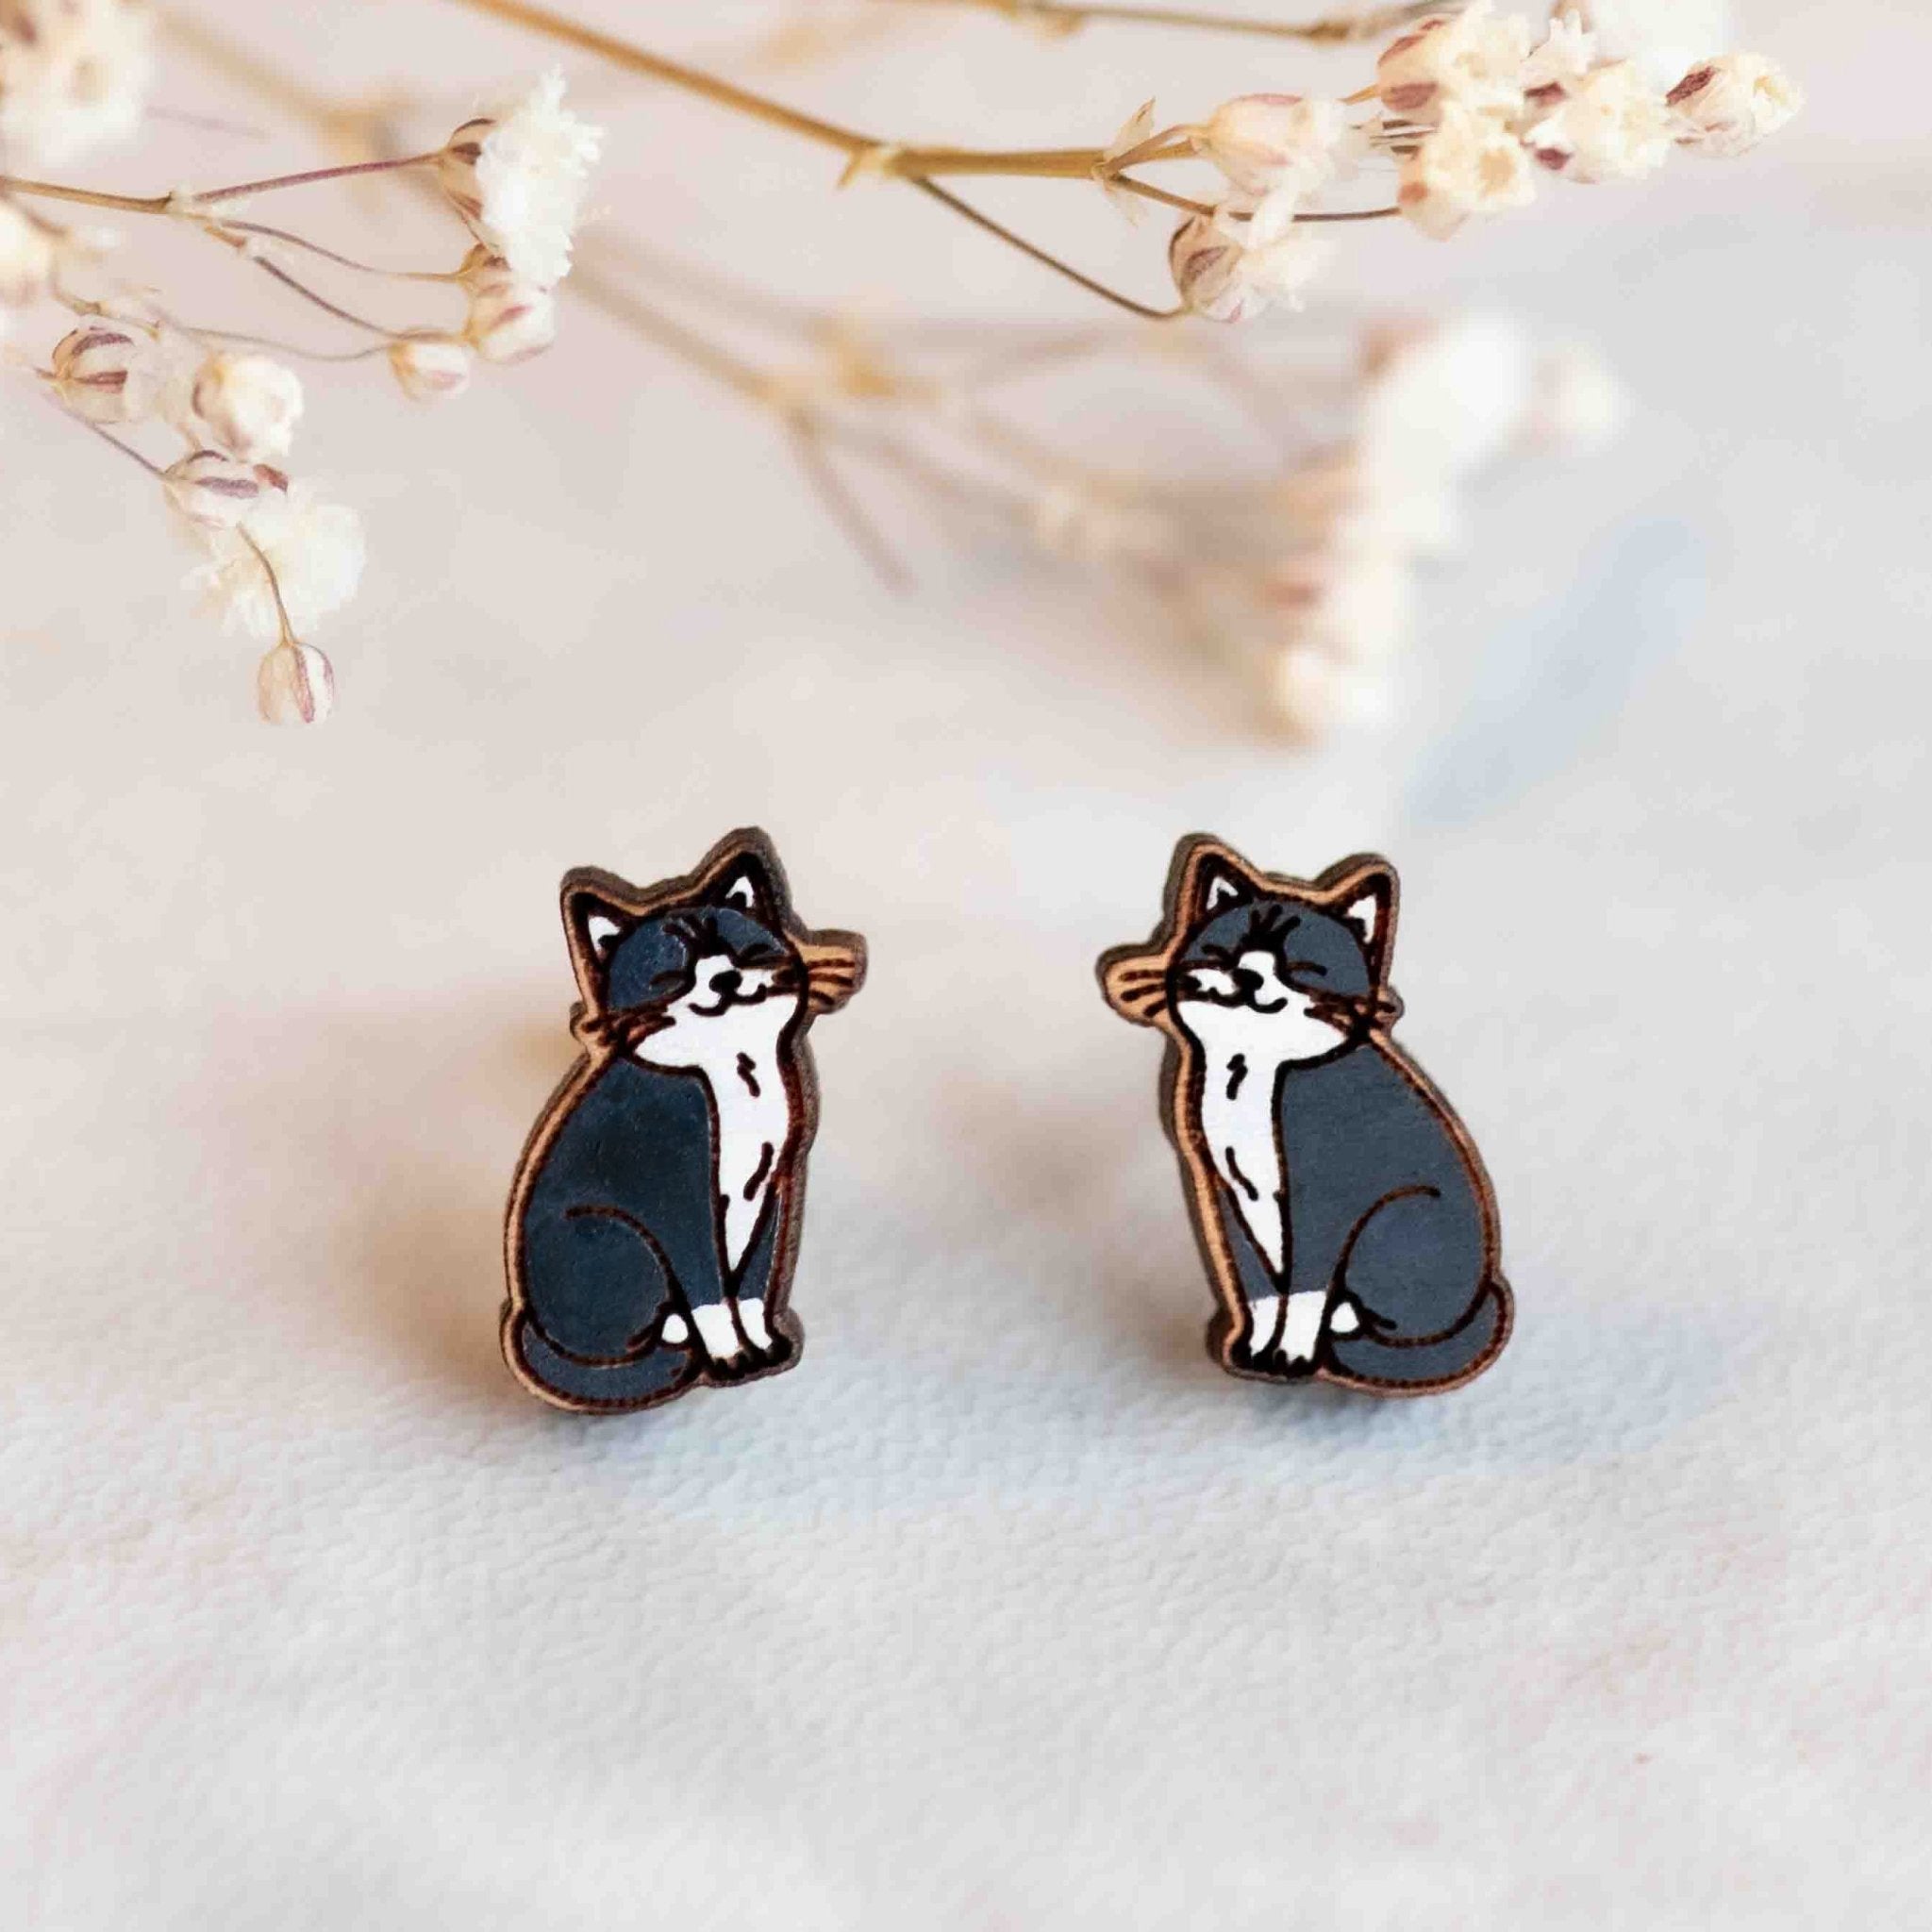 Milk Black Cat Cherry Wood Earrings -PEL10173 - Robin Valley Official Store